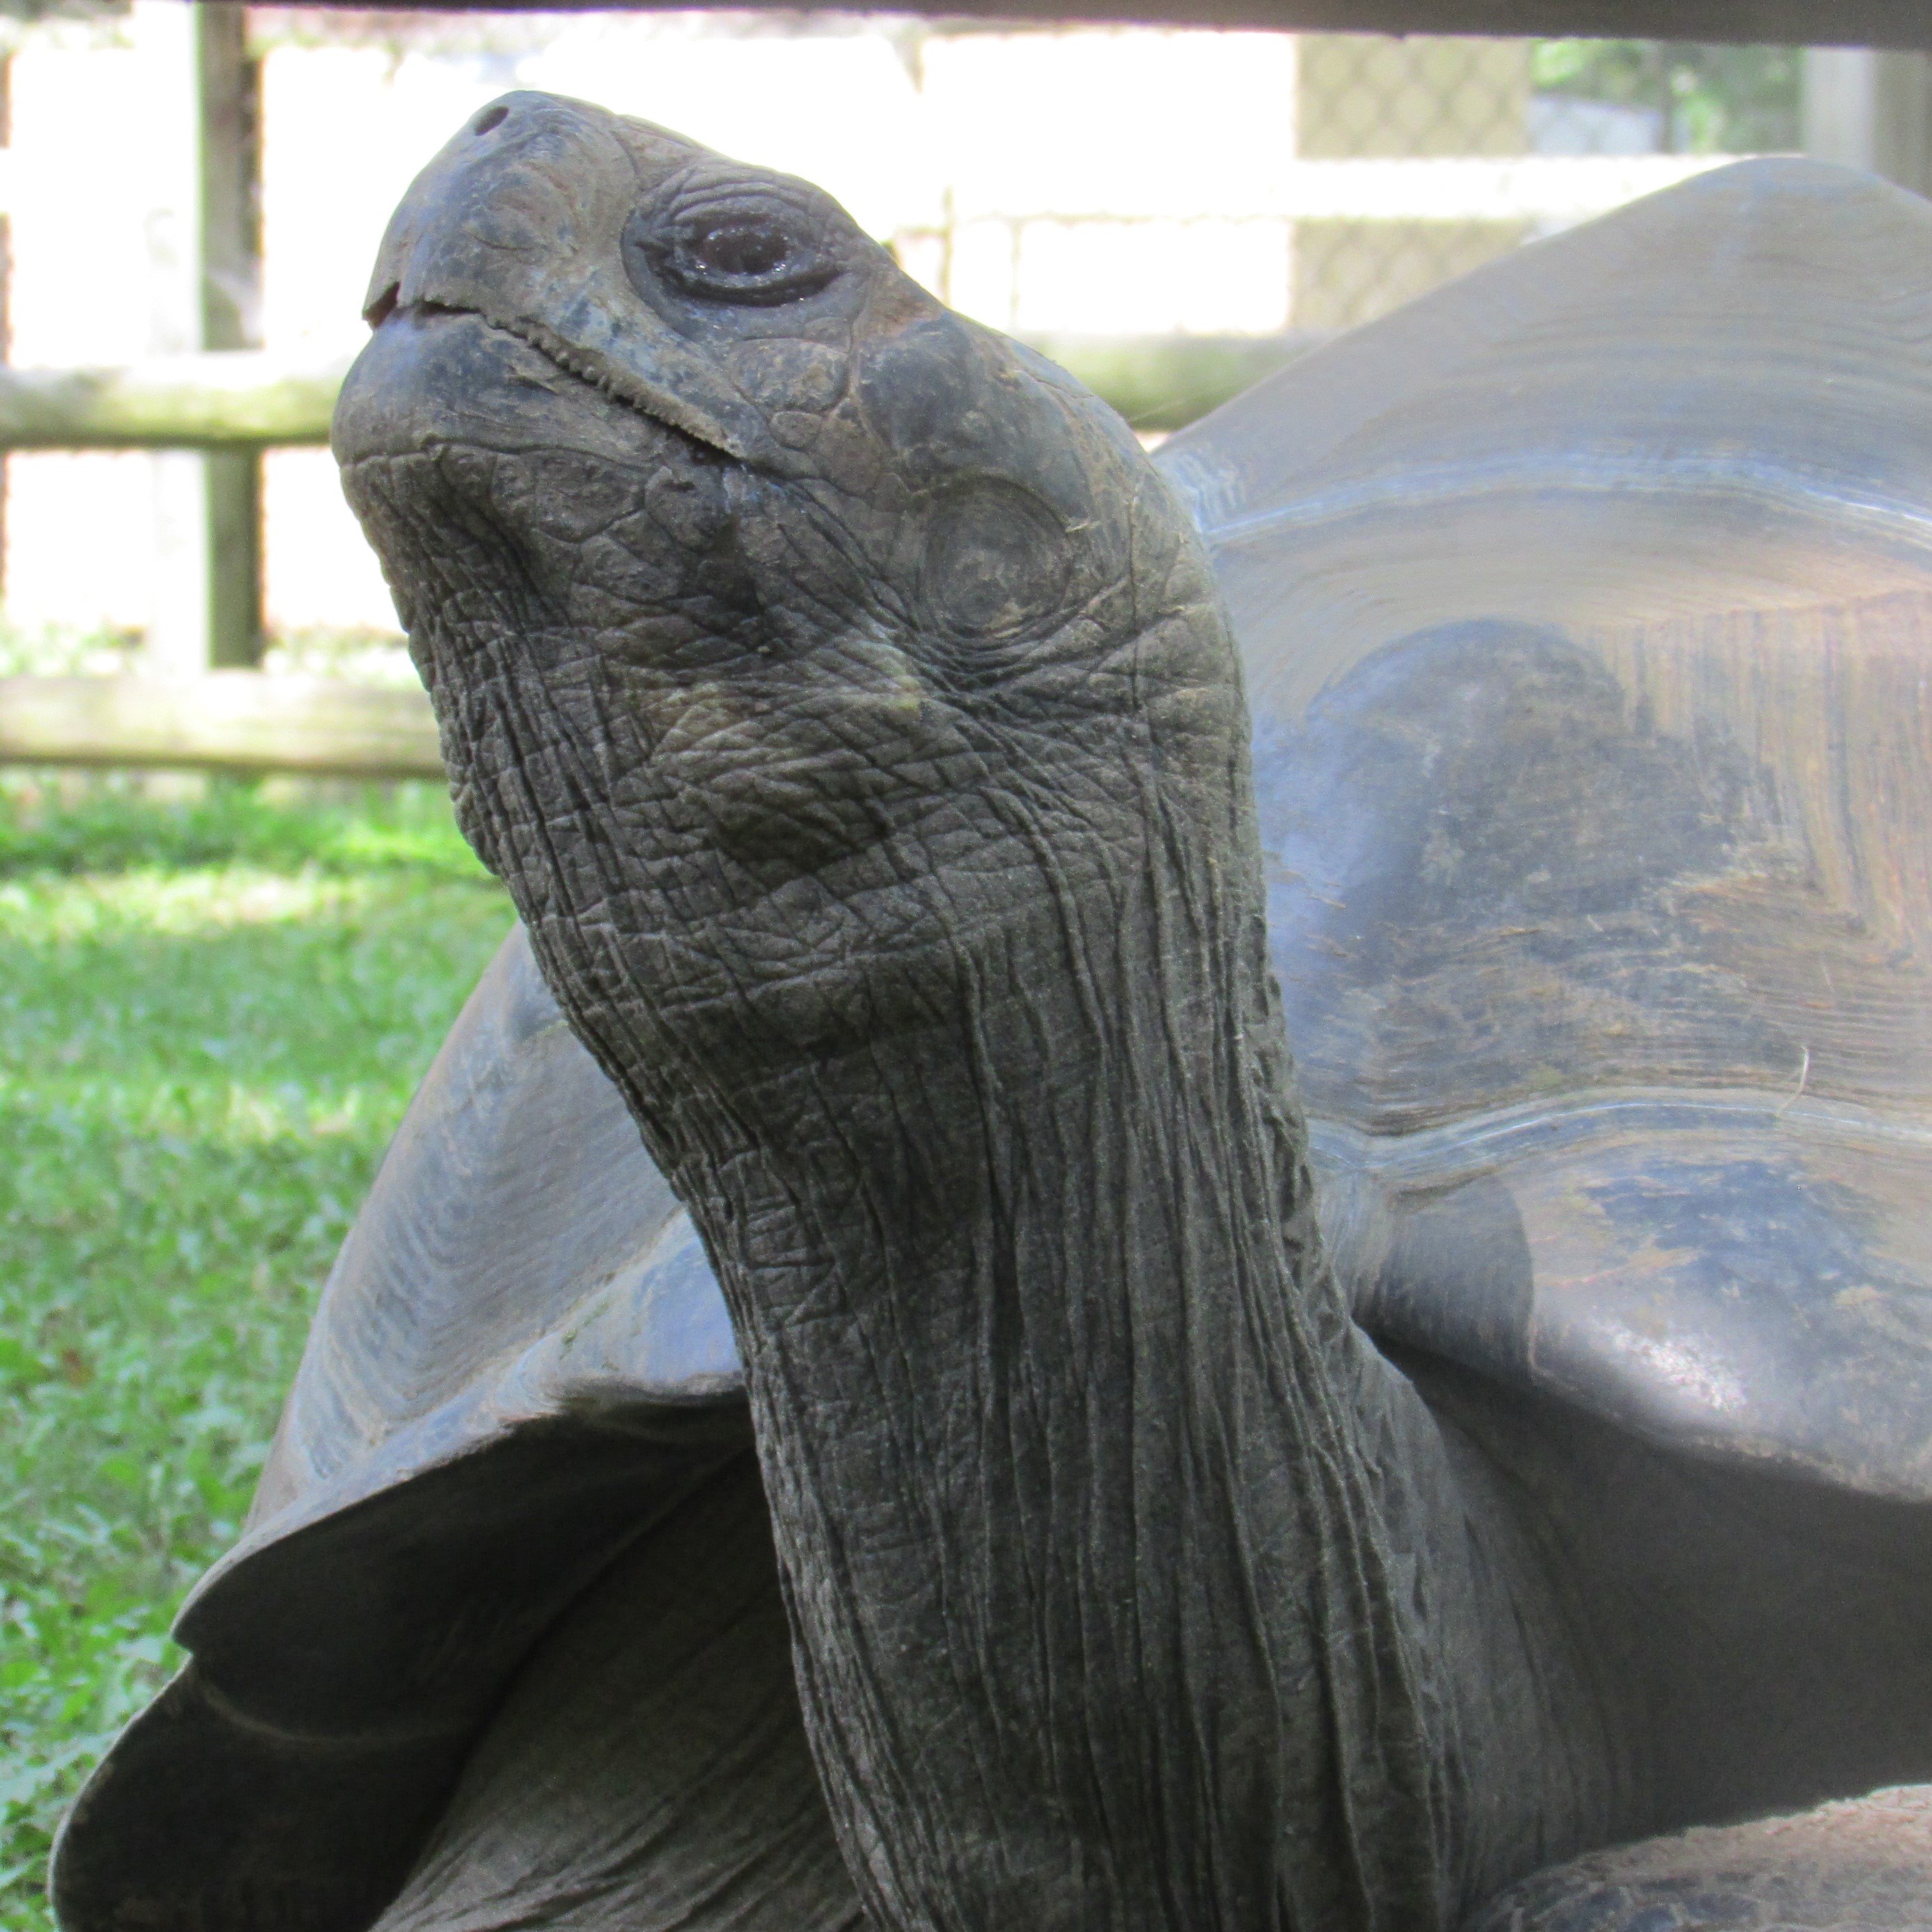 Galapagos Tortoise Henson Robinson Zoo Springfield (217)585-1821